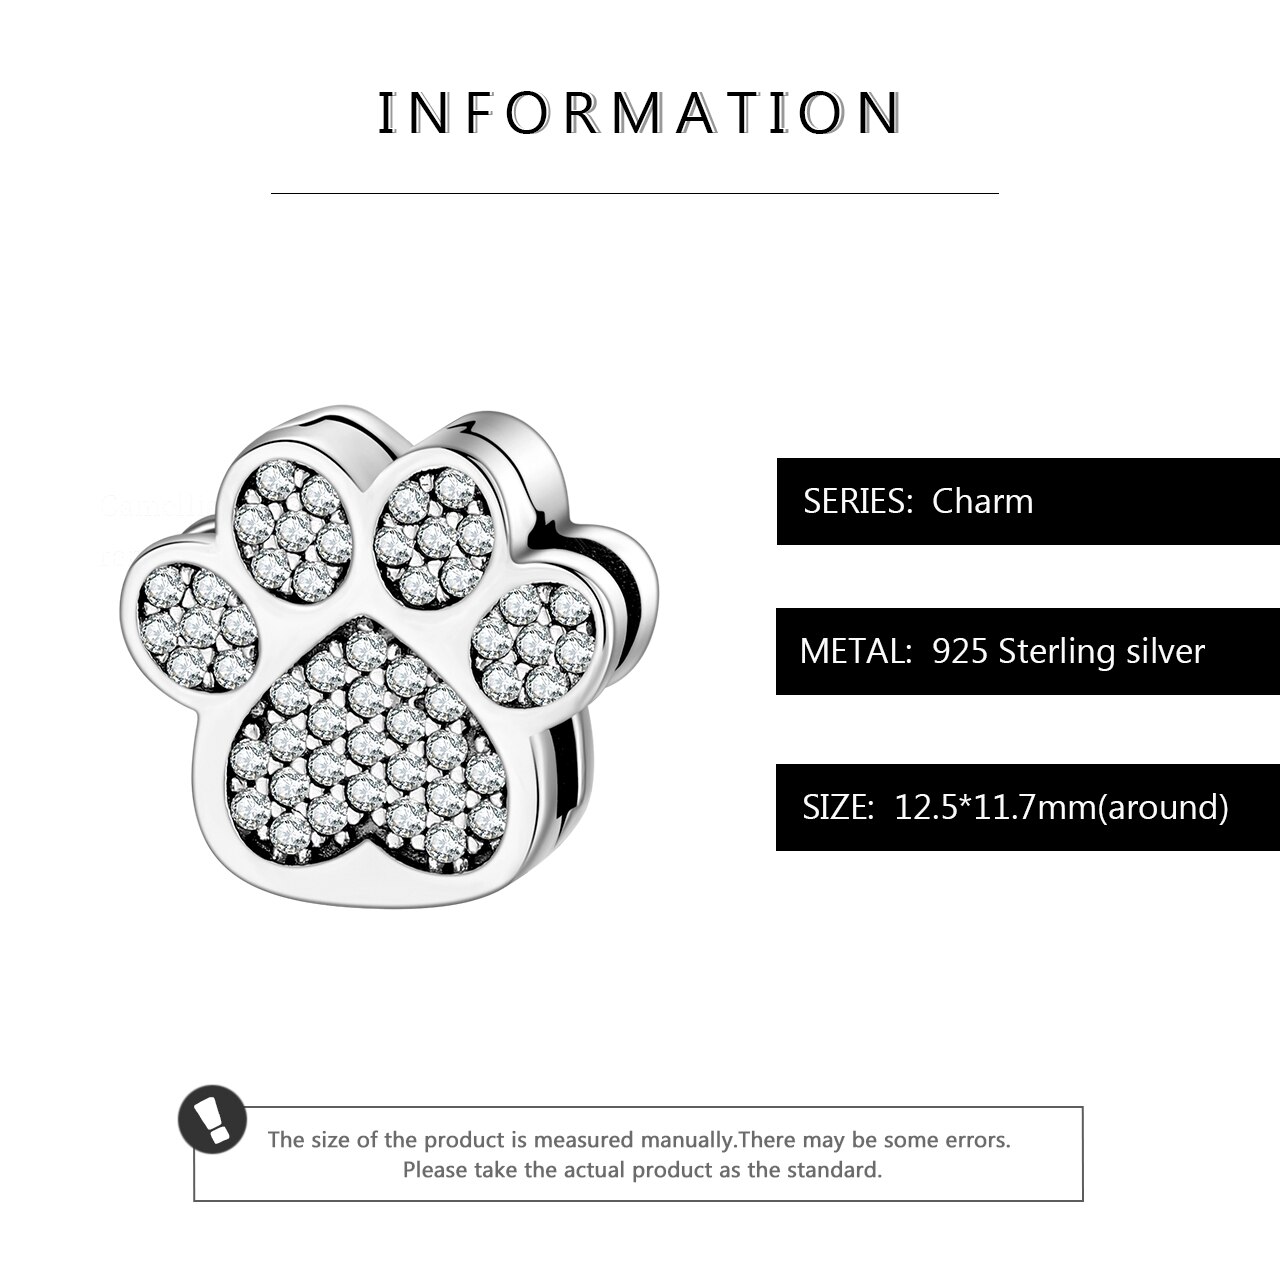 100% 925 sterling sølv mousserende cz hundeklo perler klip passer til original refleksion charme armbånd smykker gør